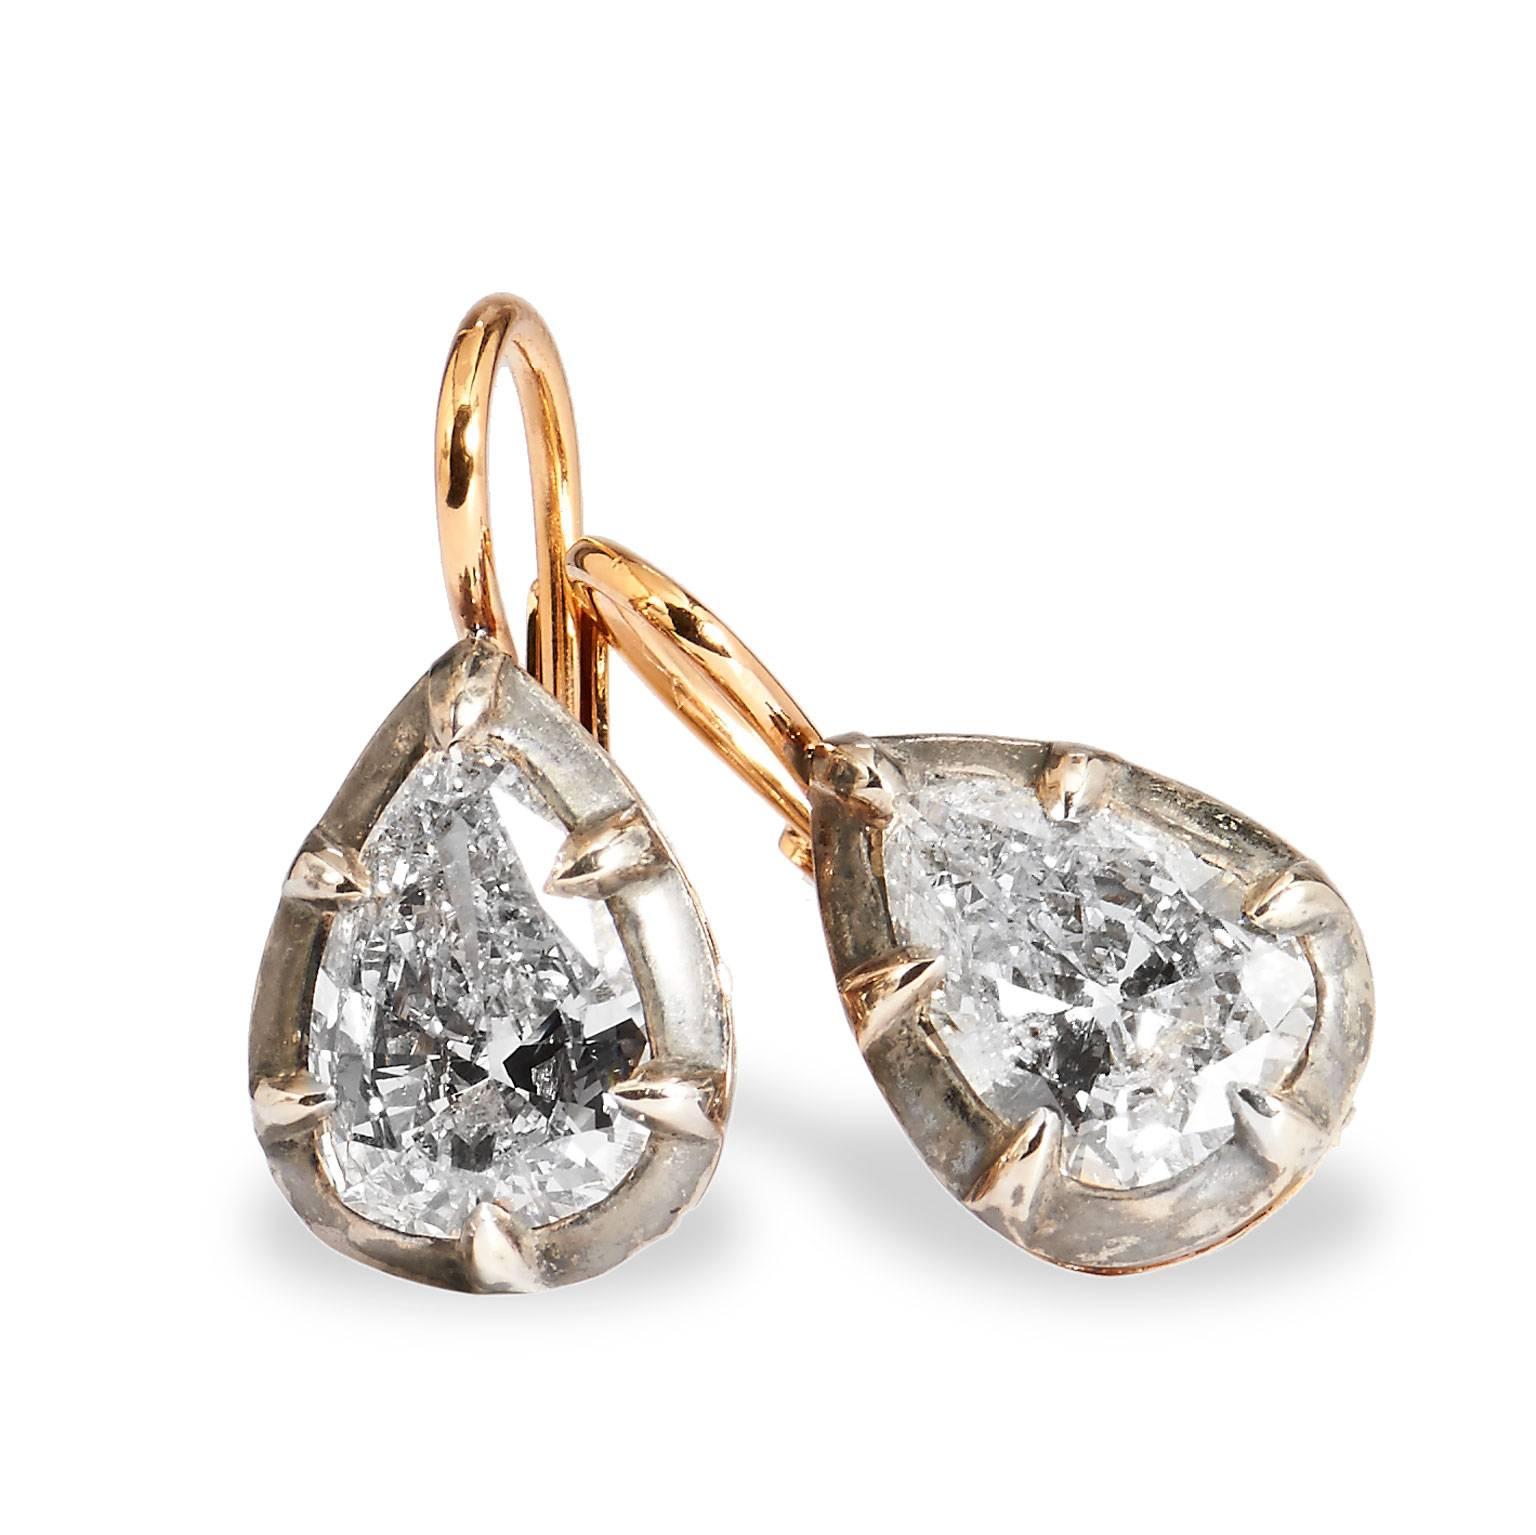 Pear Cut Victorian Inspired 1.82 Carat Pear Shaped Diamond Set in 18 Karat Gold & Silver